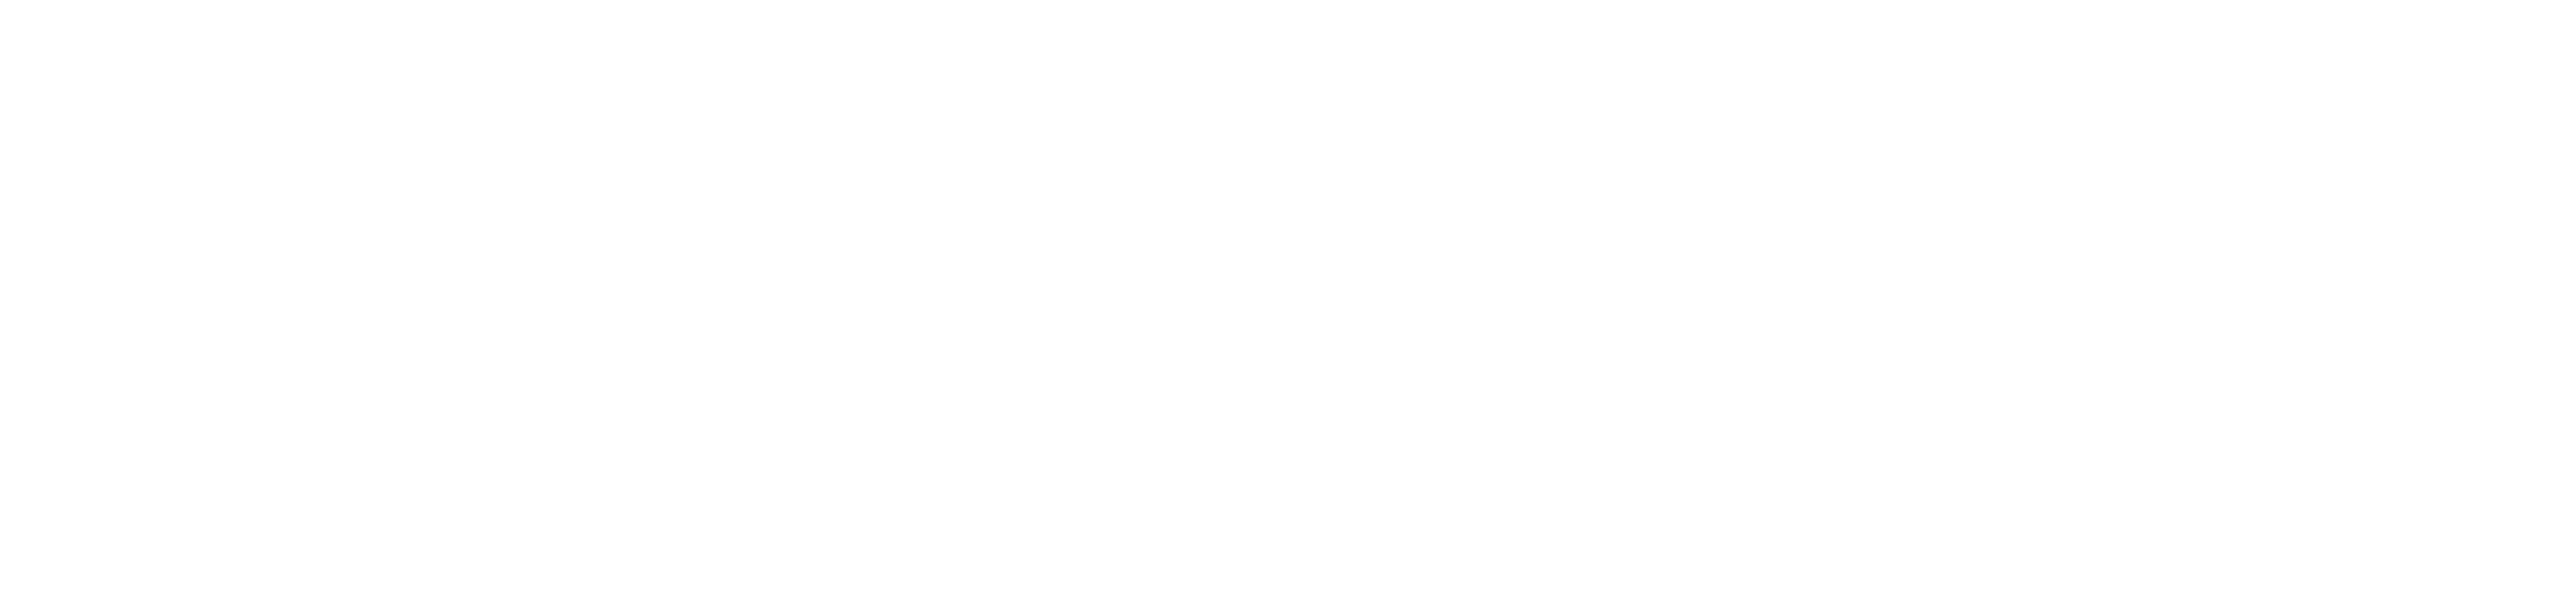 Electrolux White Logo